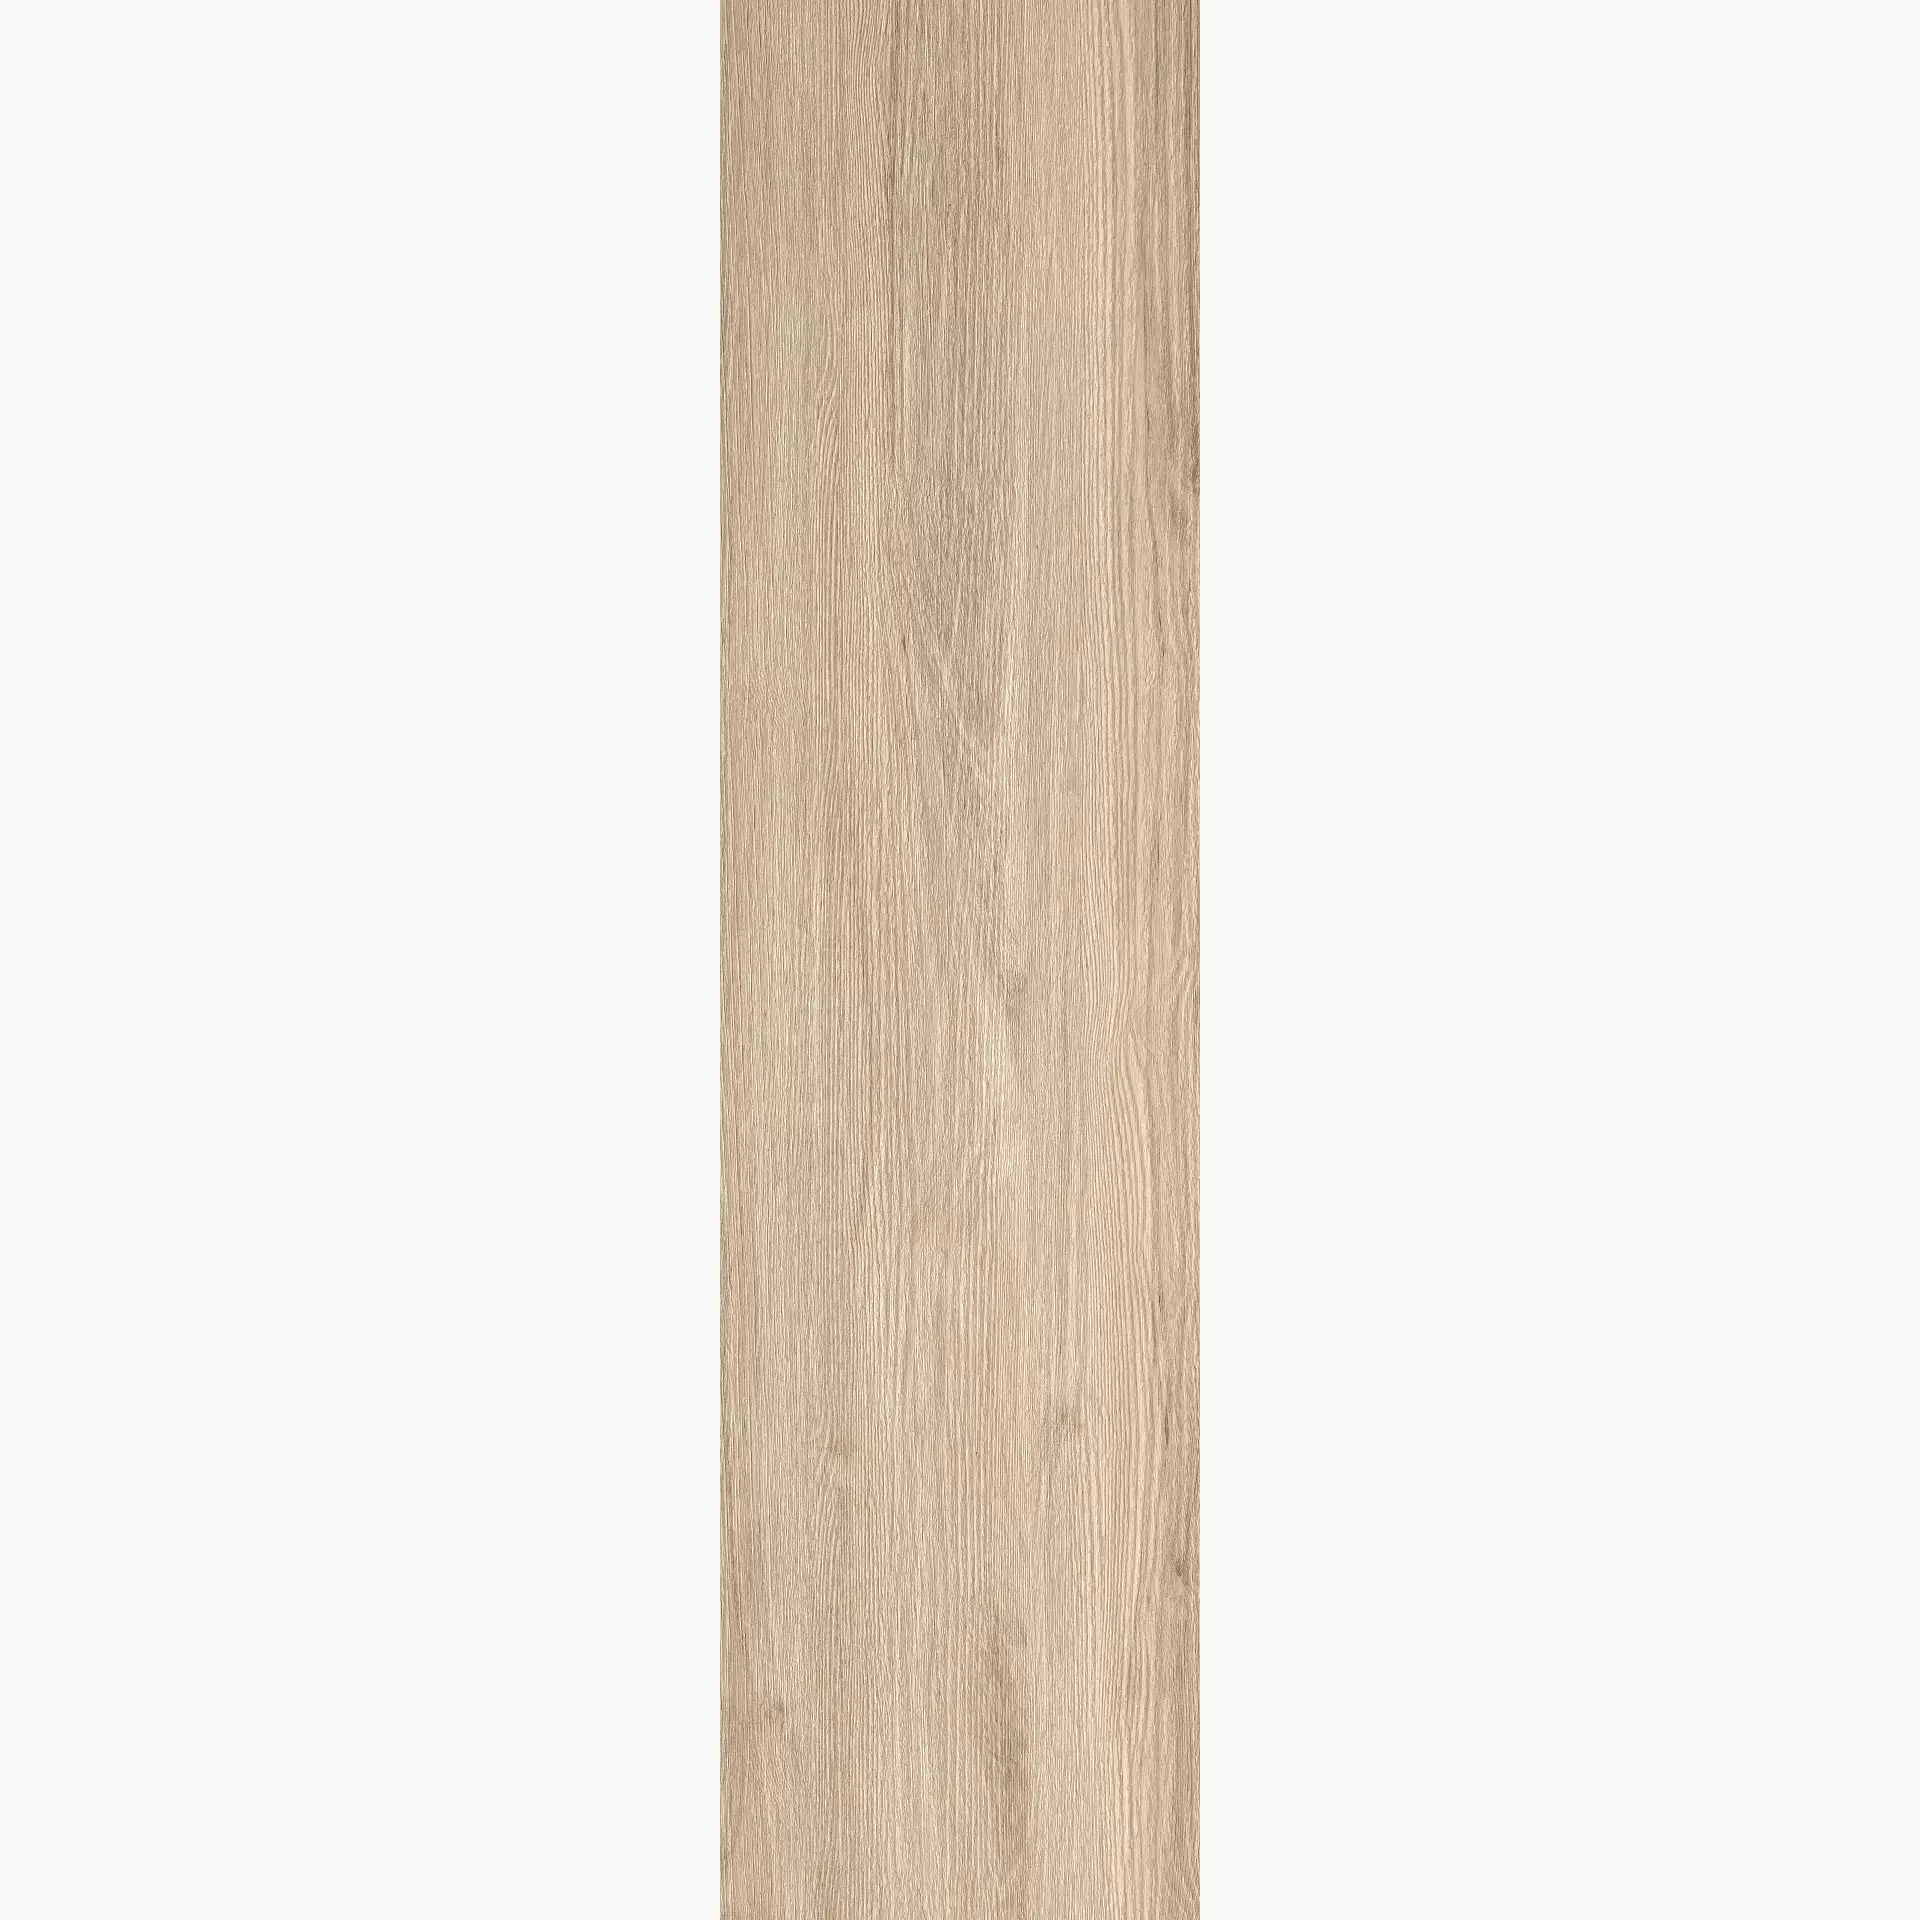 La Faenza Dama Beige Natural Slate Cut Matt Outdoor Floor 183350 30x120cm rectified 20mm - DAMA3012B ASRM